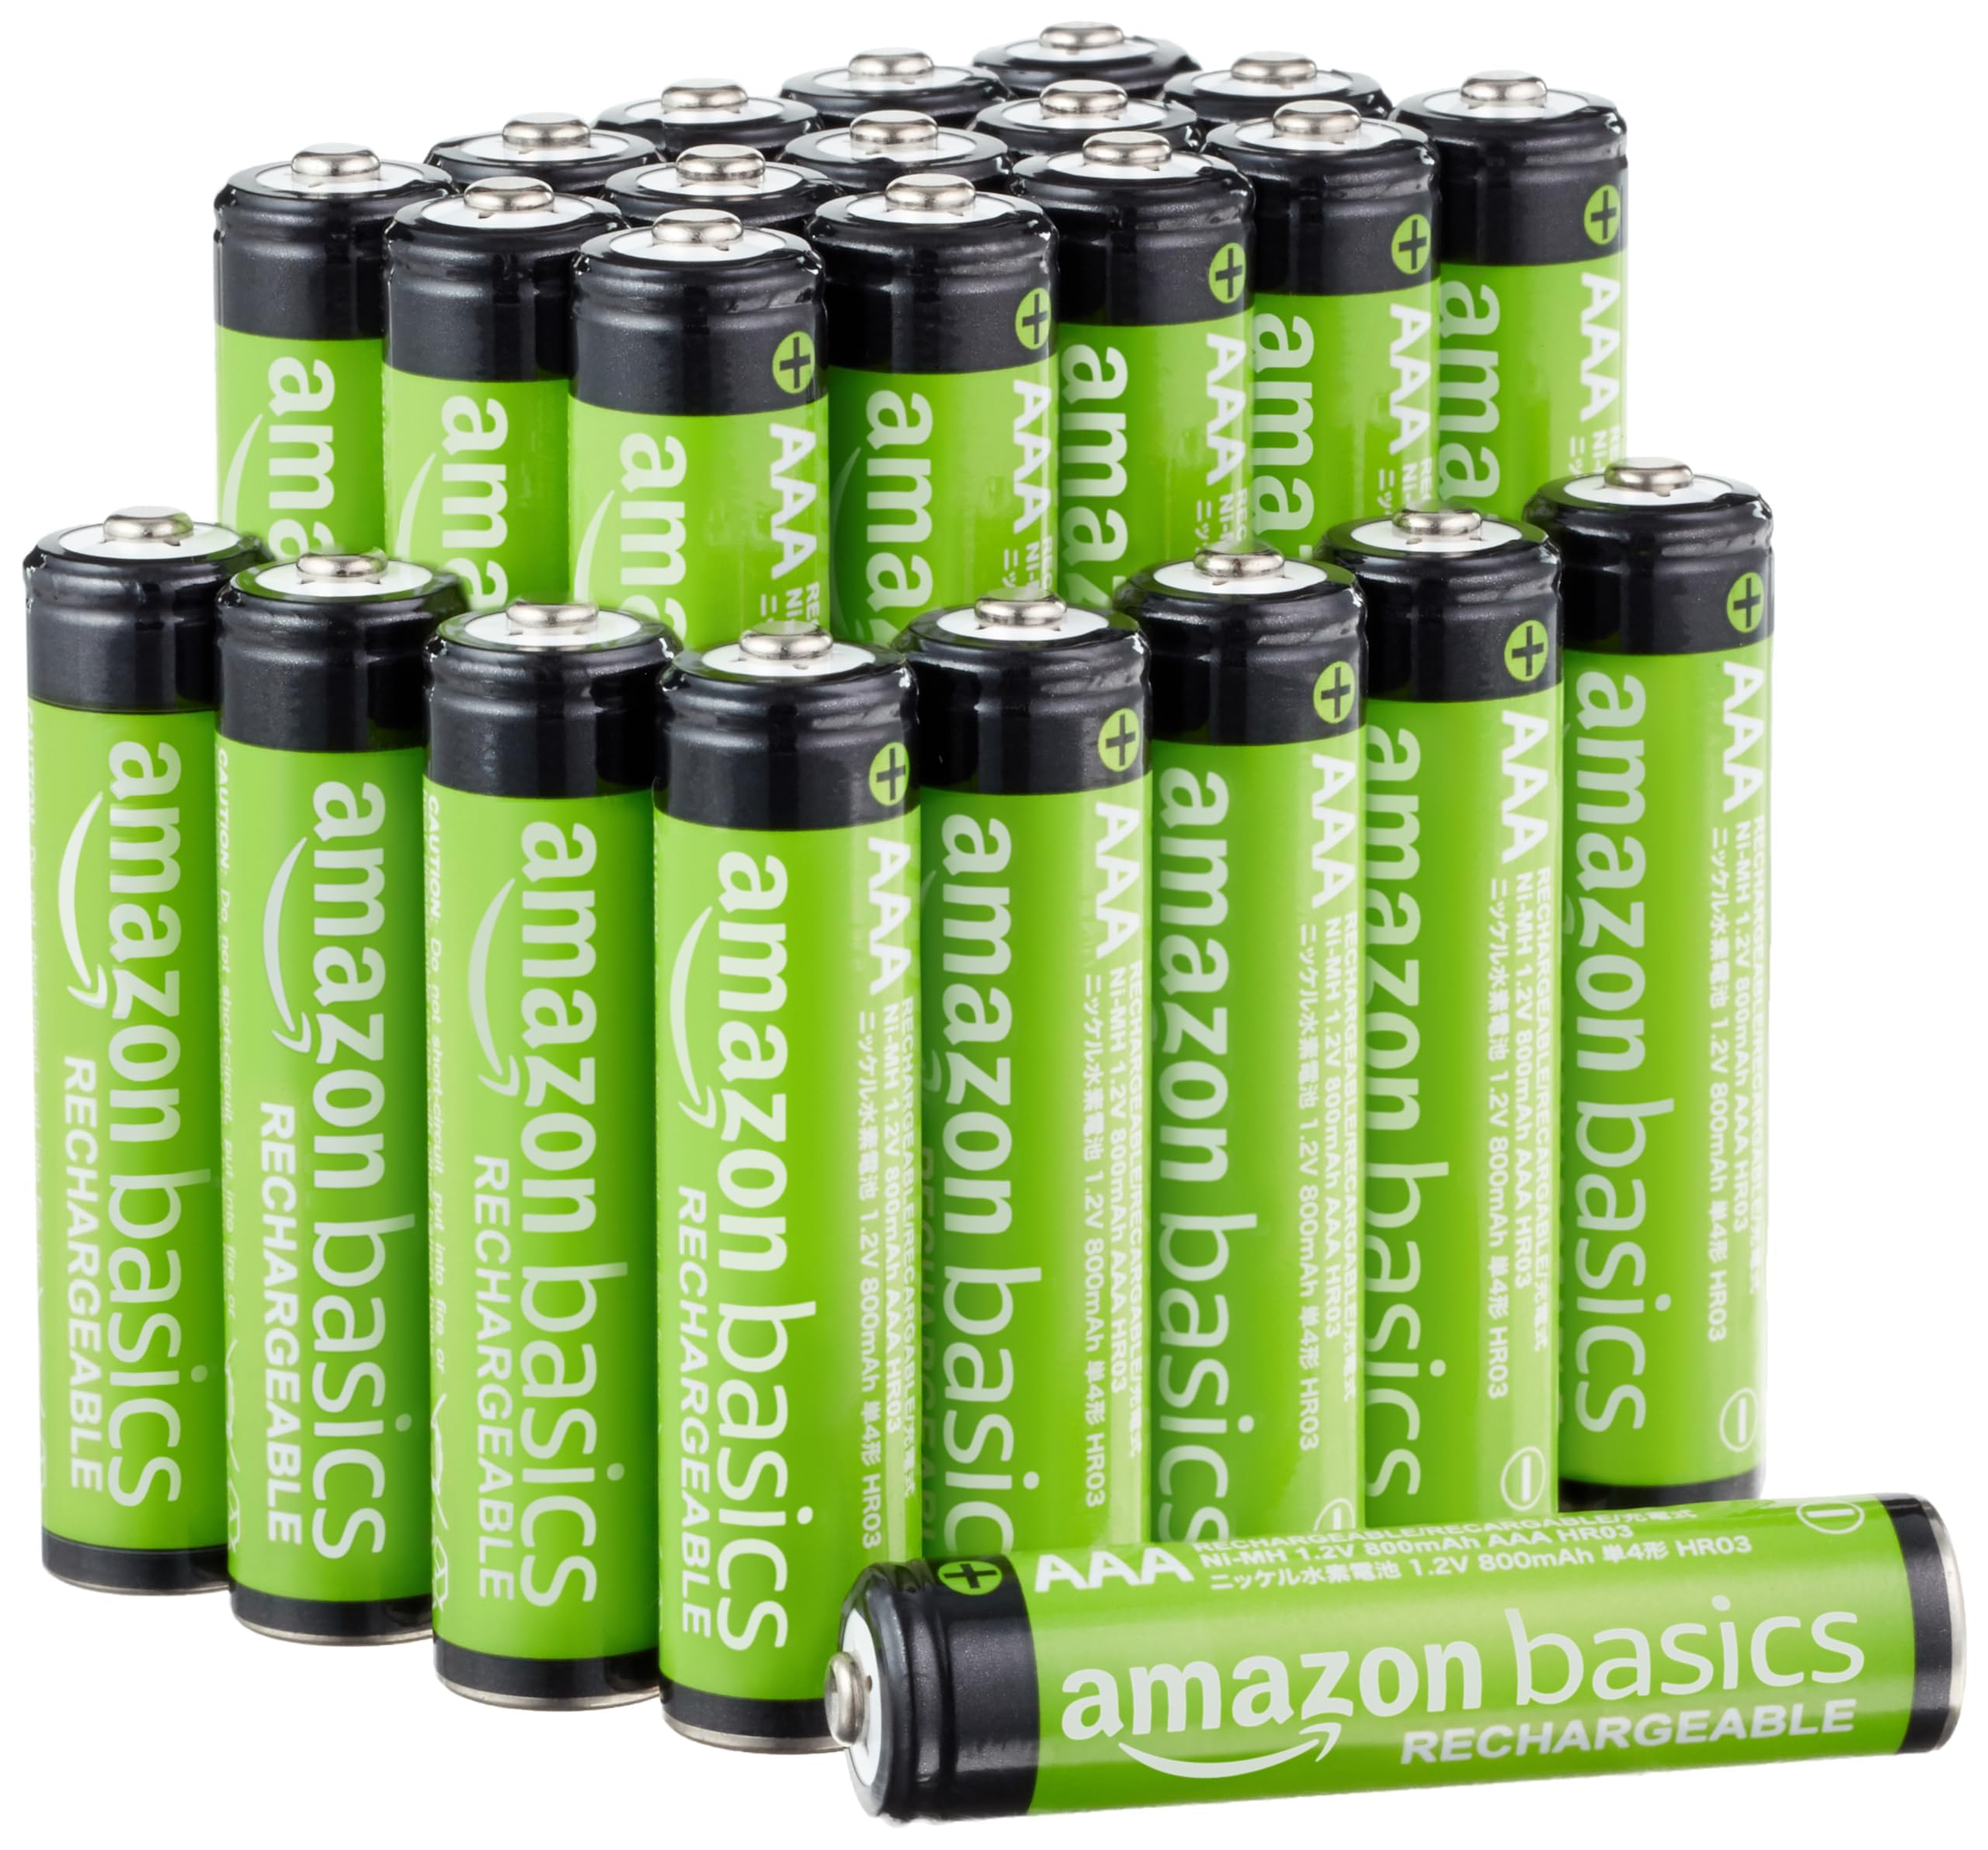 Amazon Basics 24-Pack Rechargeable AAA NiMH Performance Batteries, 800 mAh $13.72 S&S